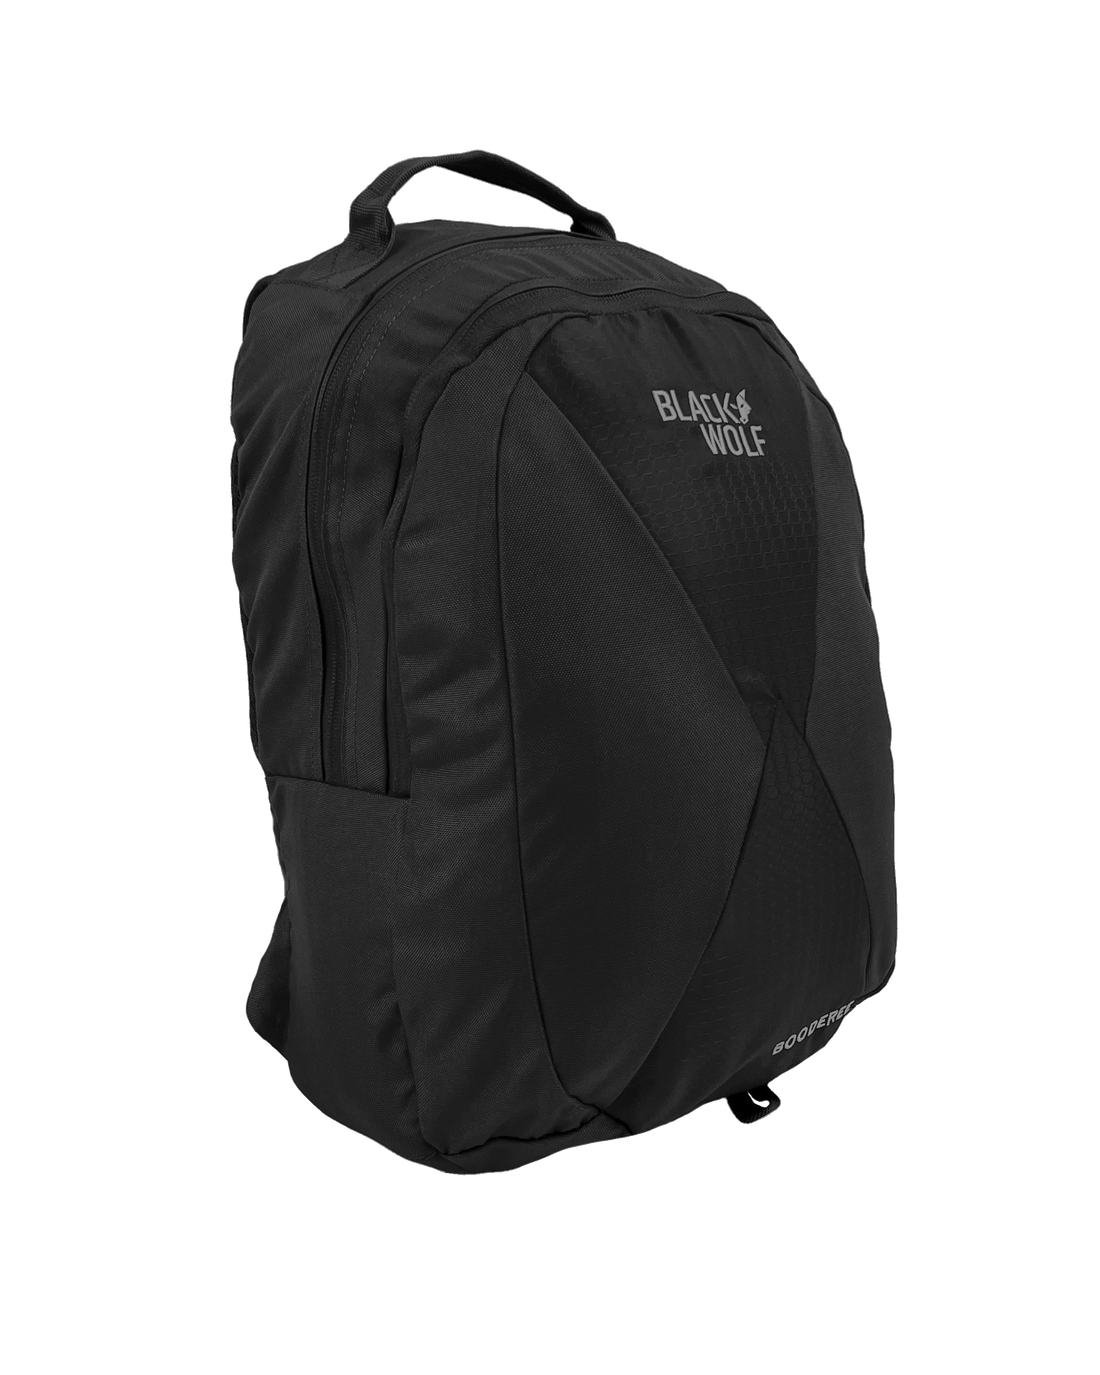 Black Wolf - Booderee 20L Backpack - Jet Black-1